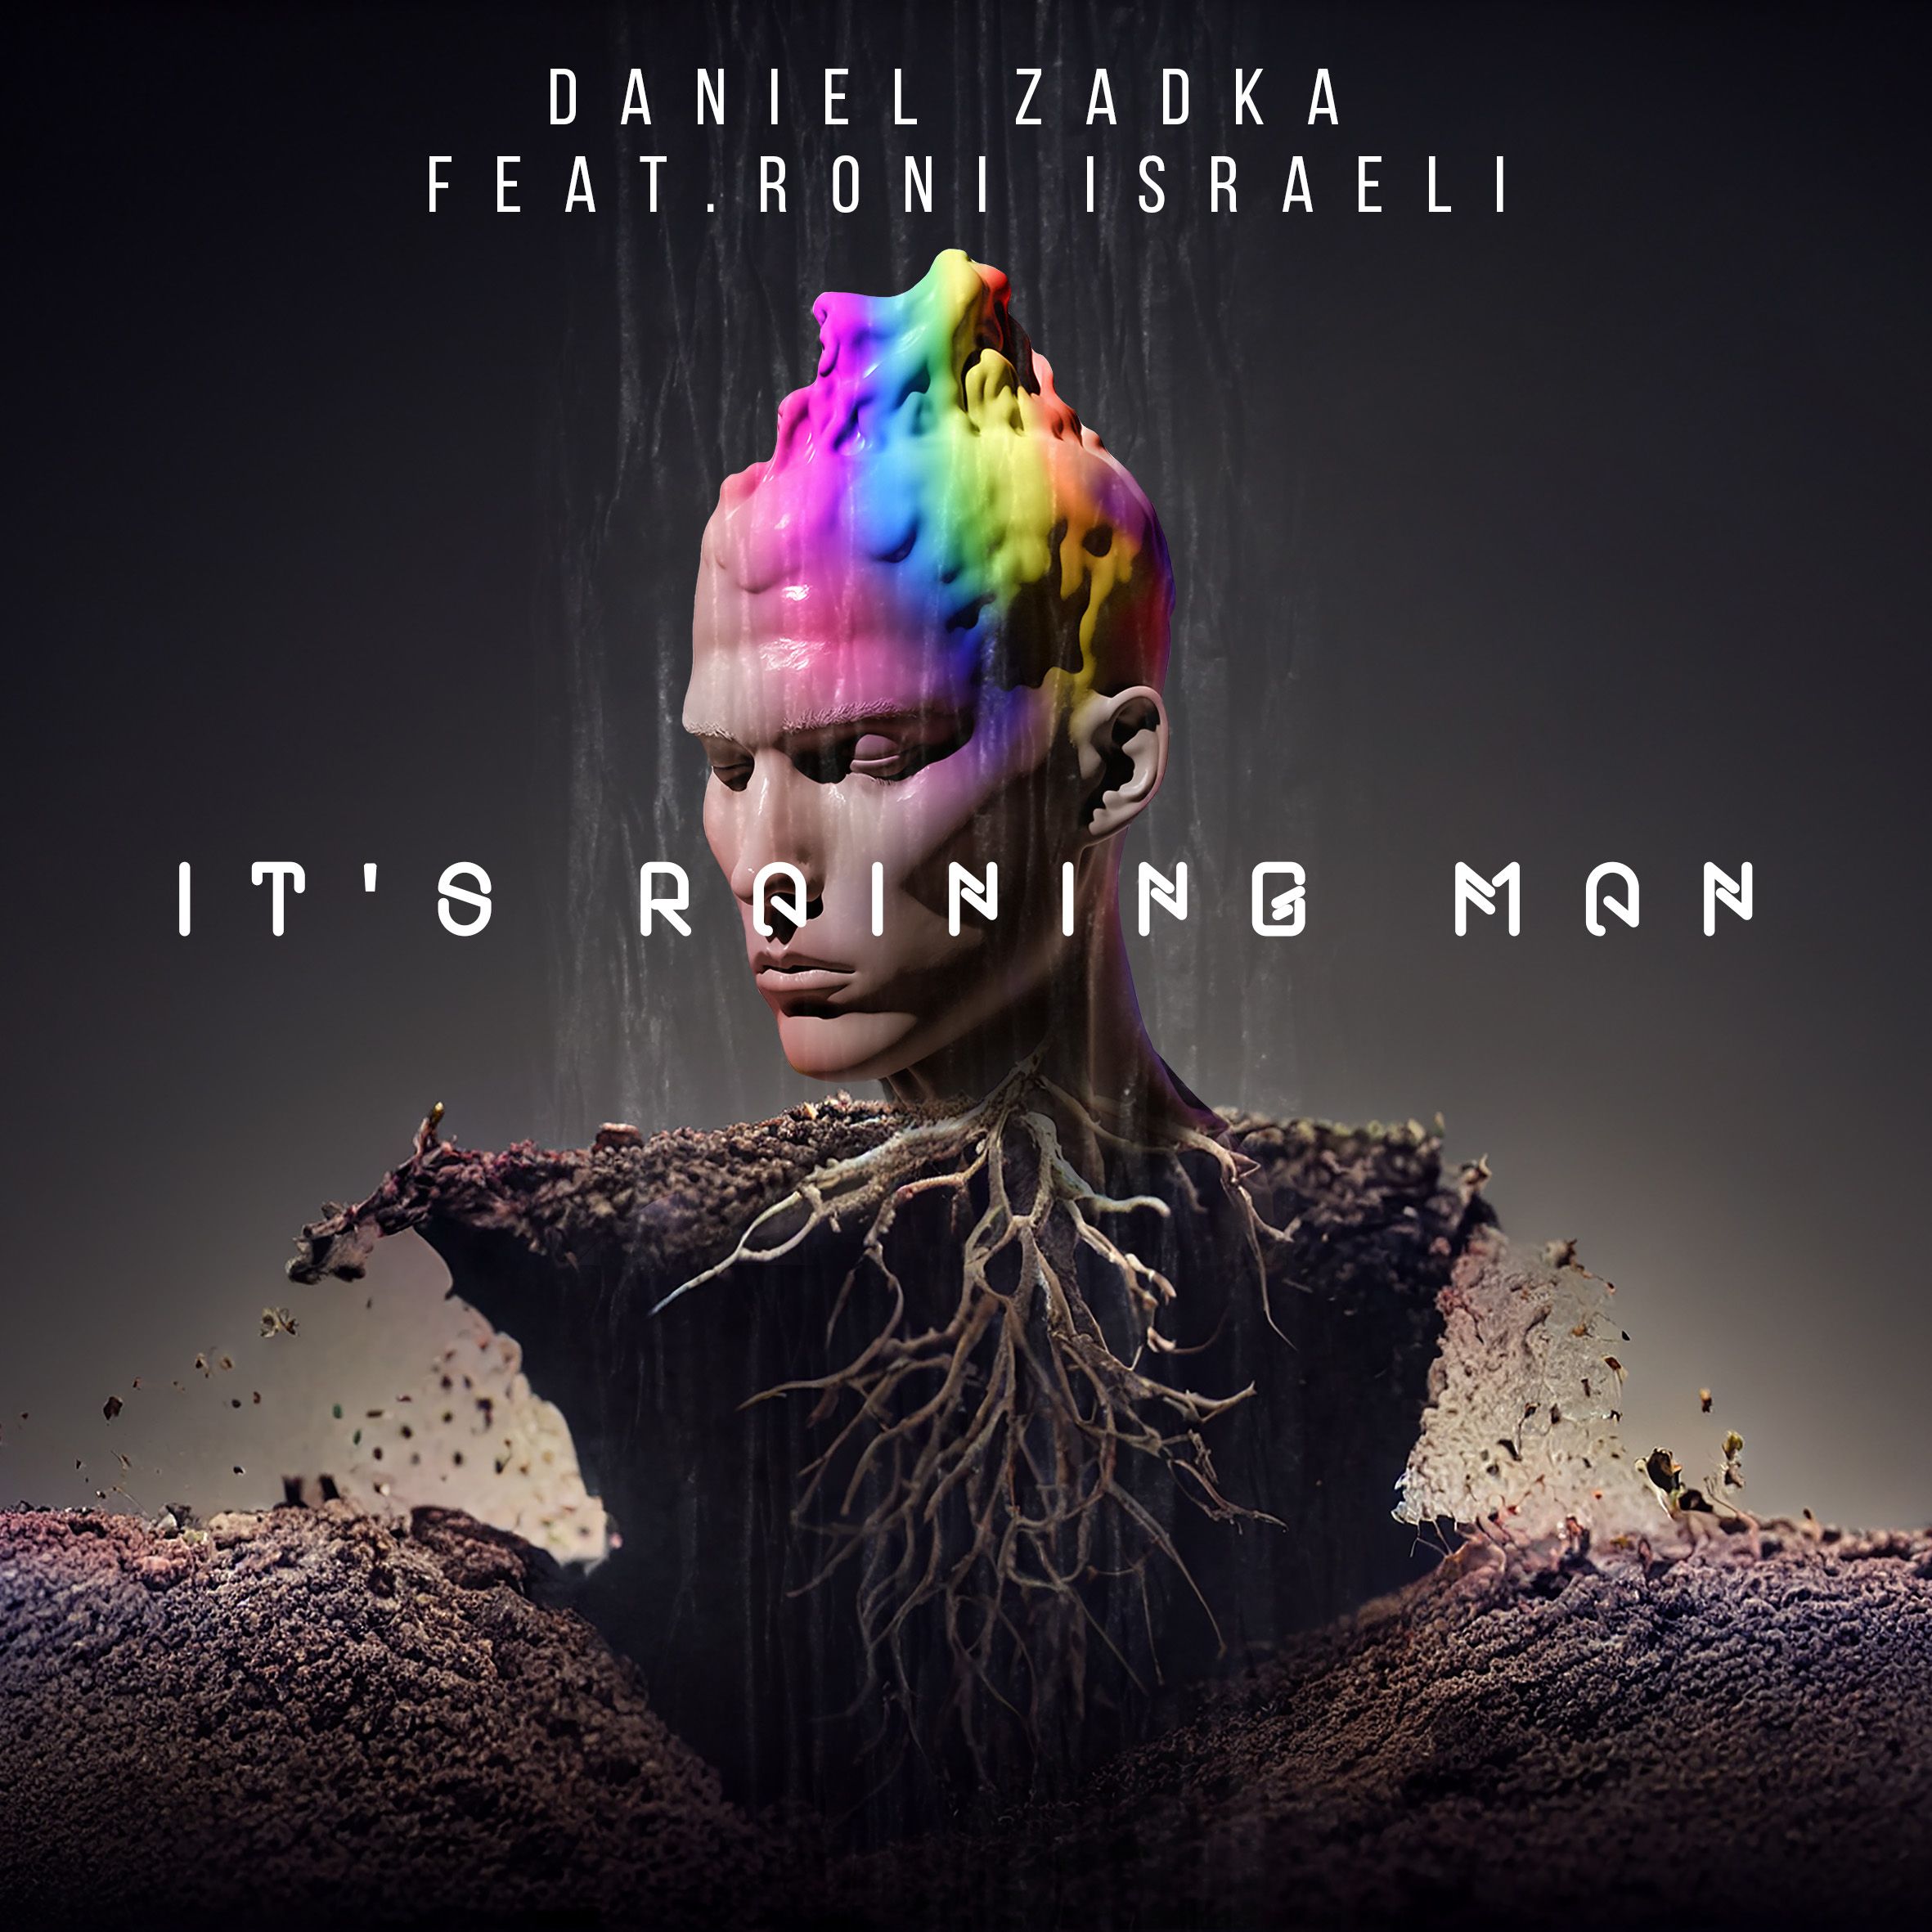 Pobierz! Daniel Zadka Feat. Roni Israeli - It’s Raining Men